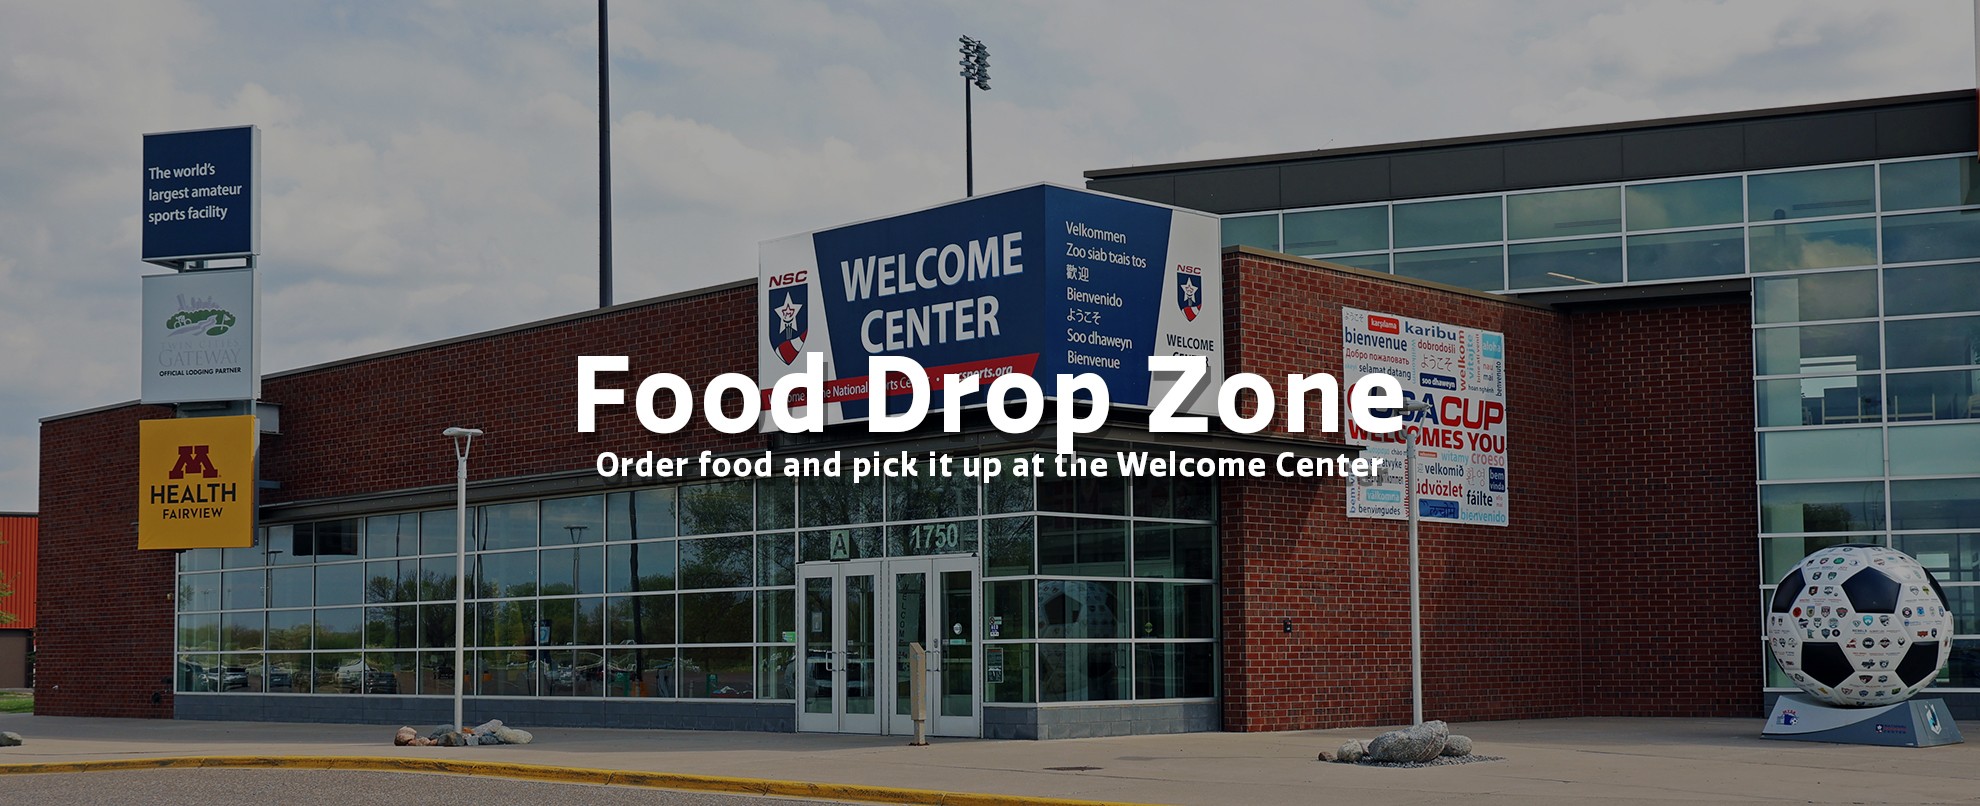 Food Drop Zone